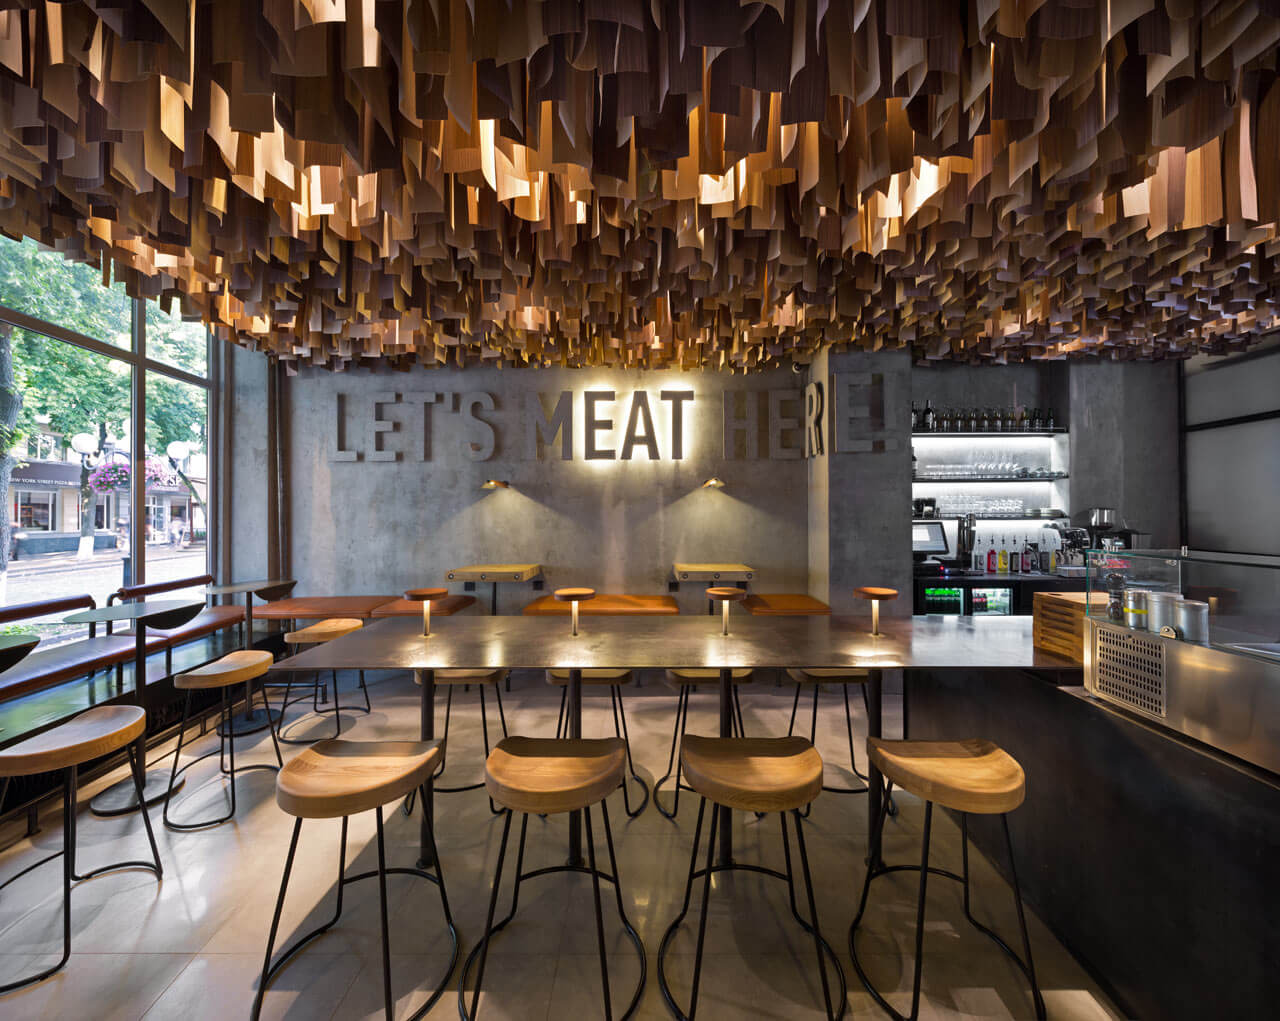 Restaurant Interior Design Ideas To Make Your Restaurant Look More ...